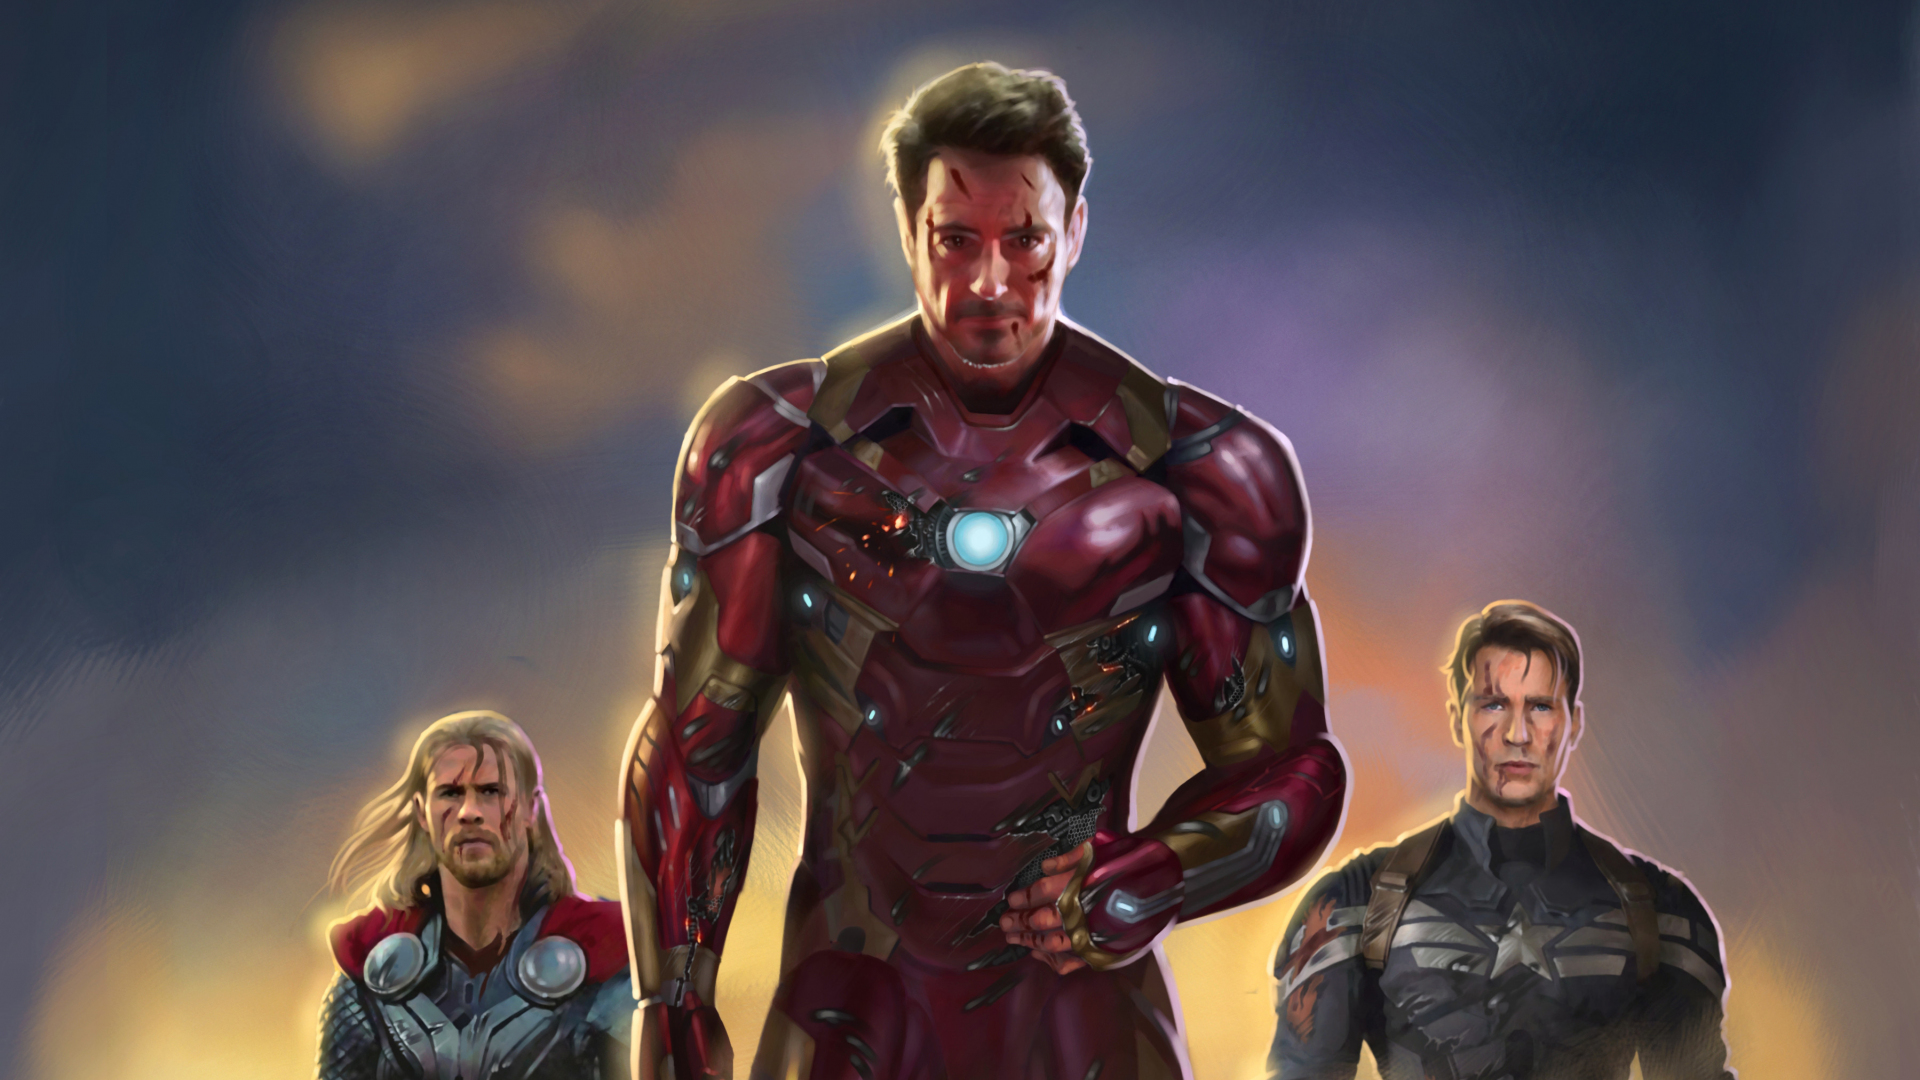 Download 1920x1080 Wallpaper Iron Man, Captain America, Thor, Fan Art, 4k,  Full Hd, Hdtv, Fhd, 1080p, 1920x1080 Hd Image, Background, 27785